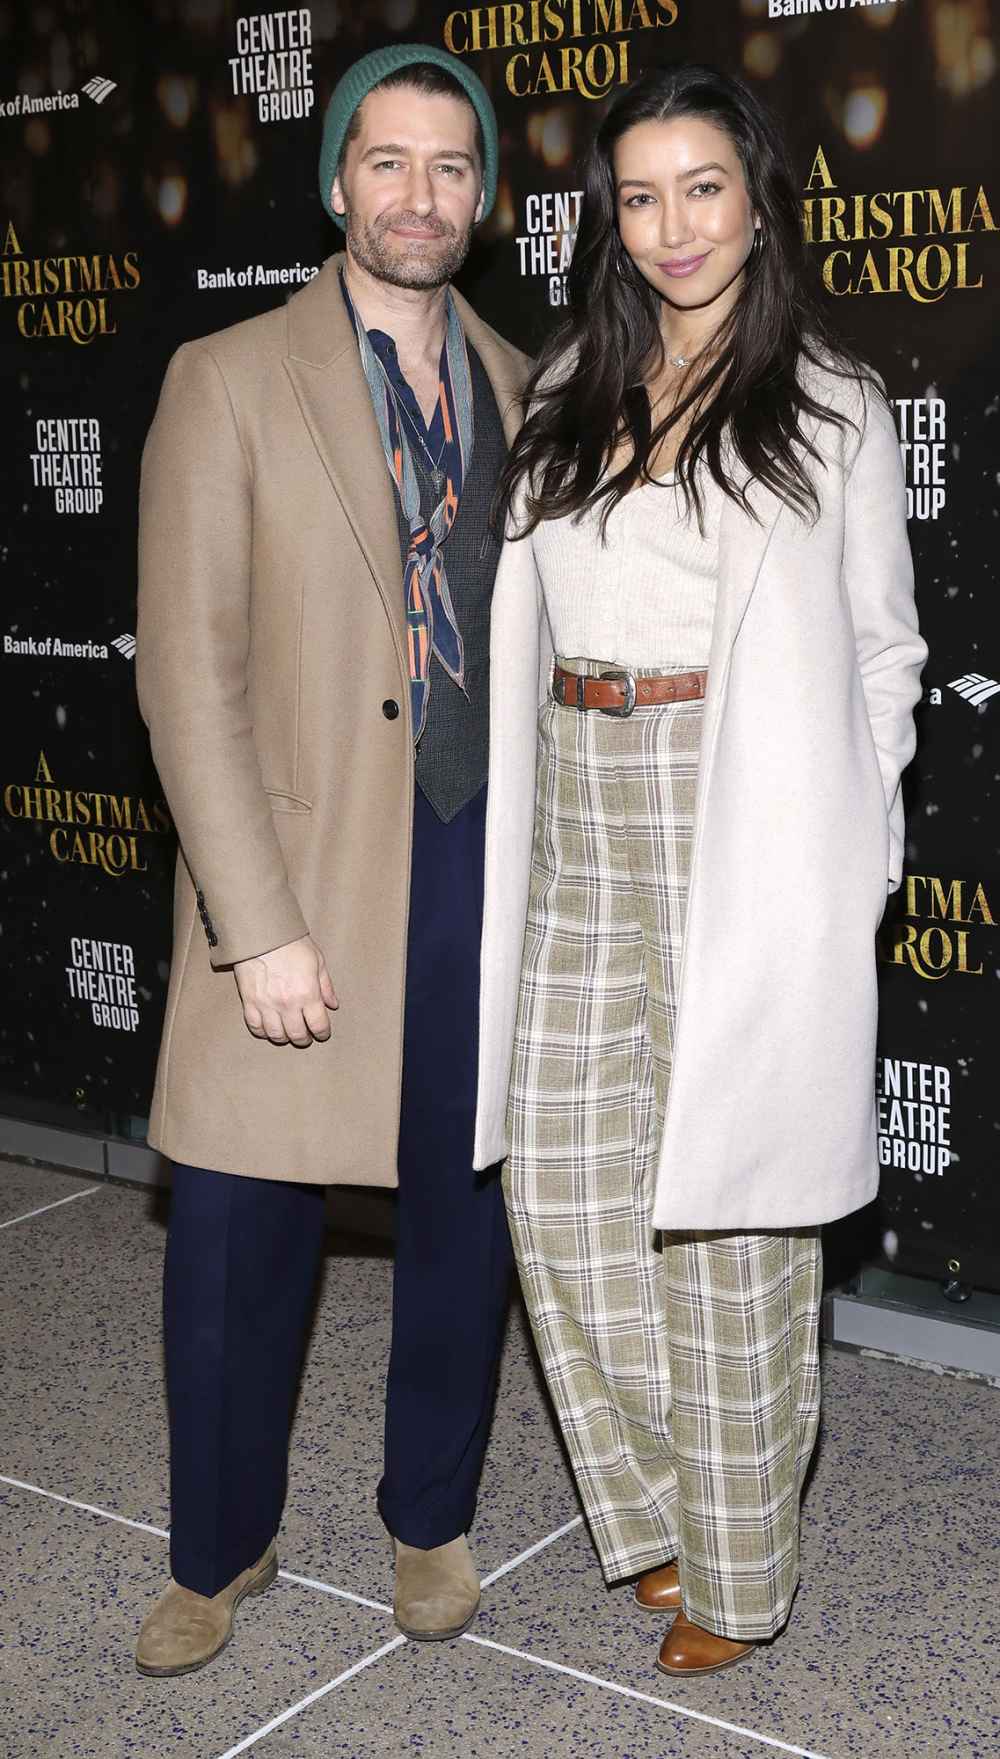 Renee Puente Breaks Silence on Husband Matthew Morrison ‘SYTYCD’ Accusations